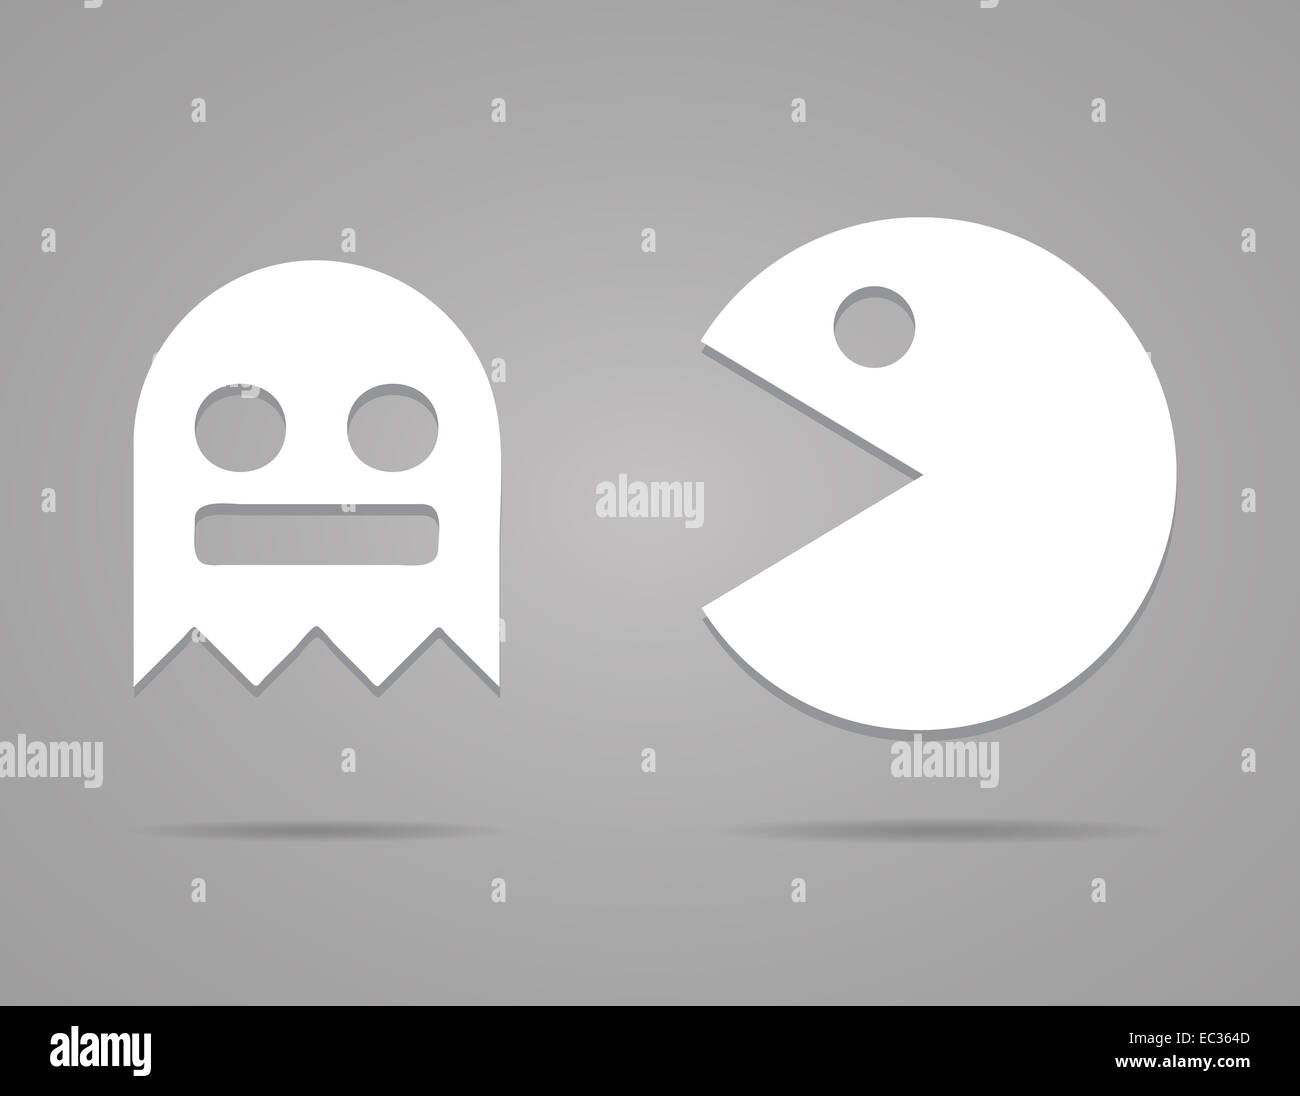 Paper Pacman, ghosts, 8bit retro game icons set Stock Photo